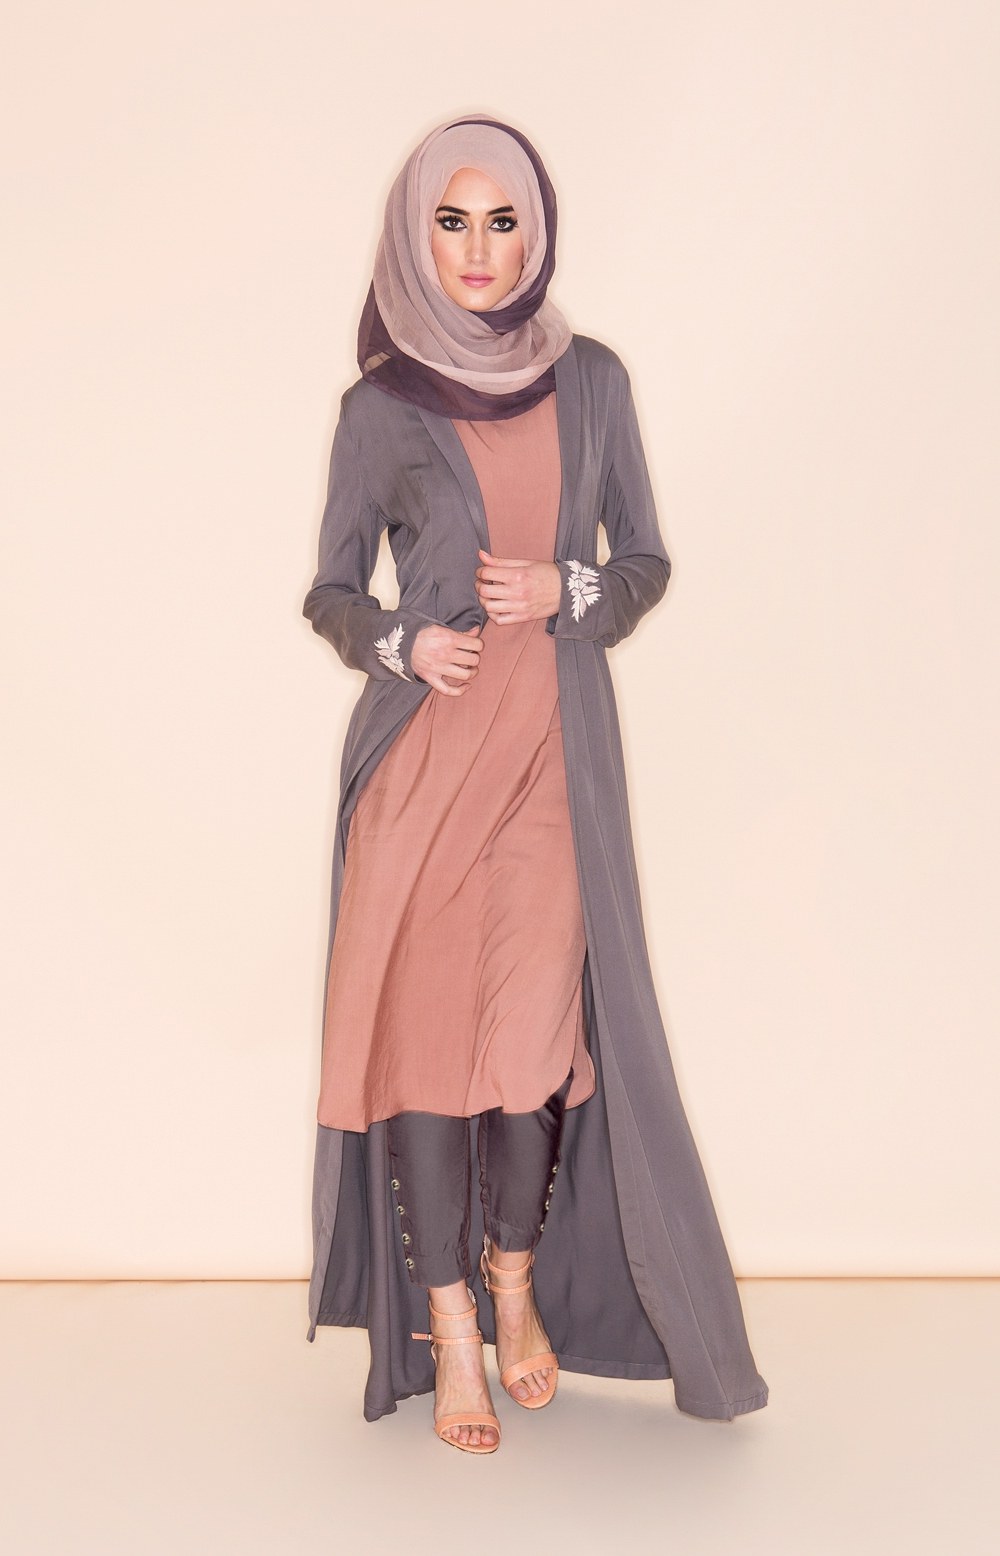 Bentuk Fashion Muslimah Terbaru 2020 Rldj 10 Contoh Model Baju Muslim Terbaru 2018